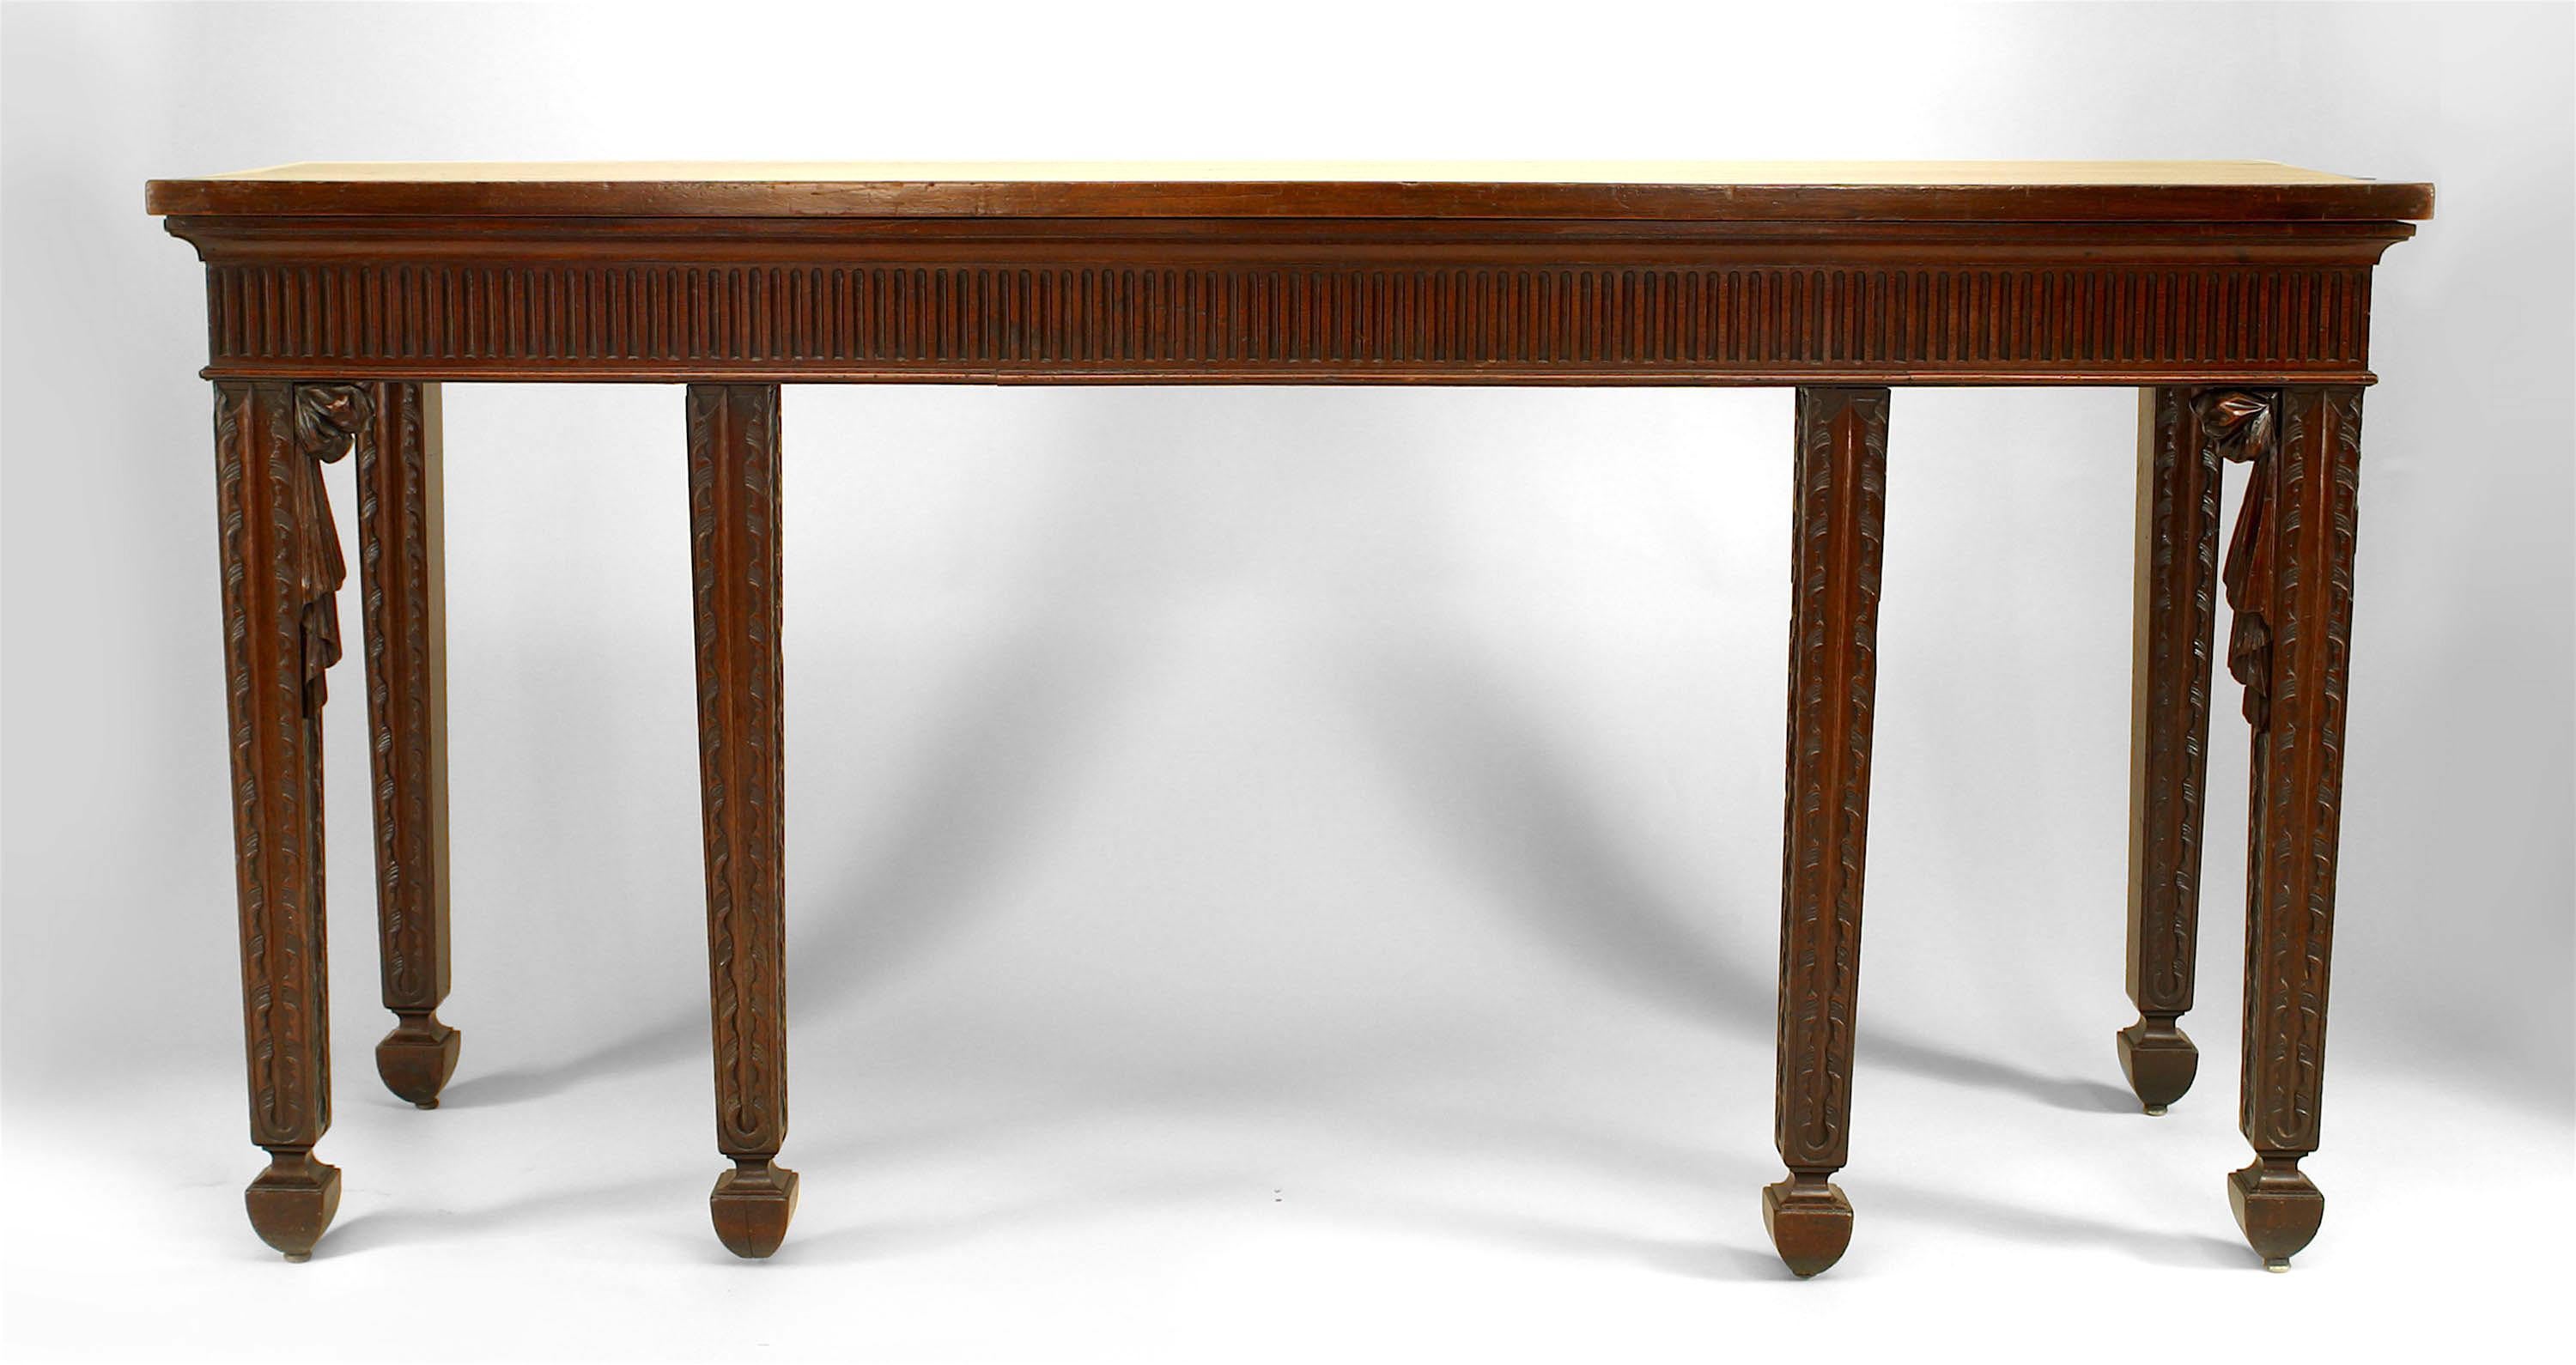 English Georgian style (19th century) mahogany six legged console table with carved drape corners.
 